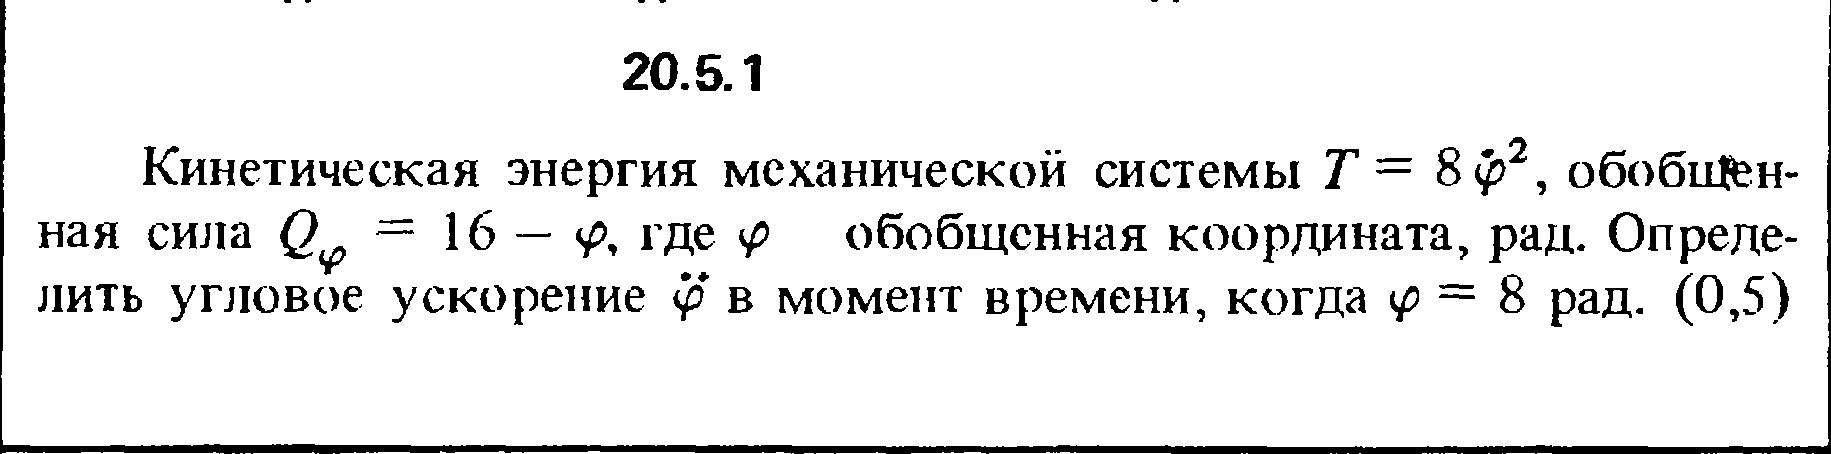 Решение 20.5.1 из сборника (решебника) Кепе О.Е. 1989